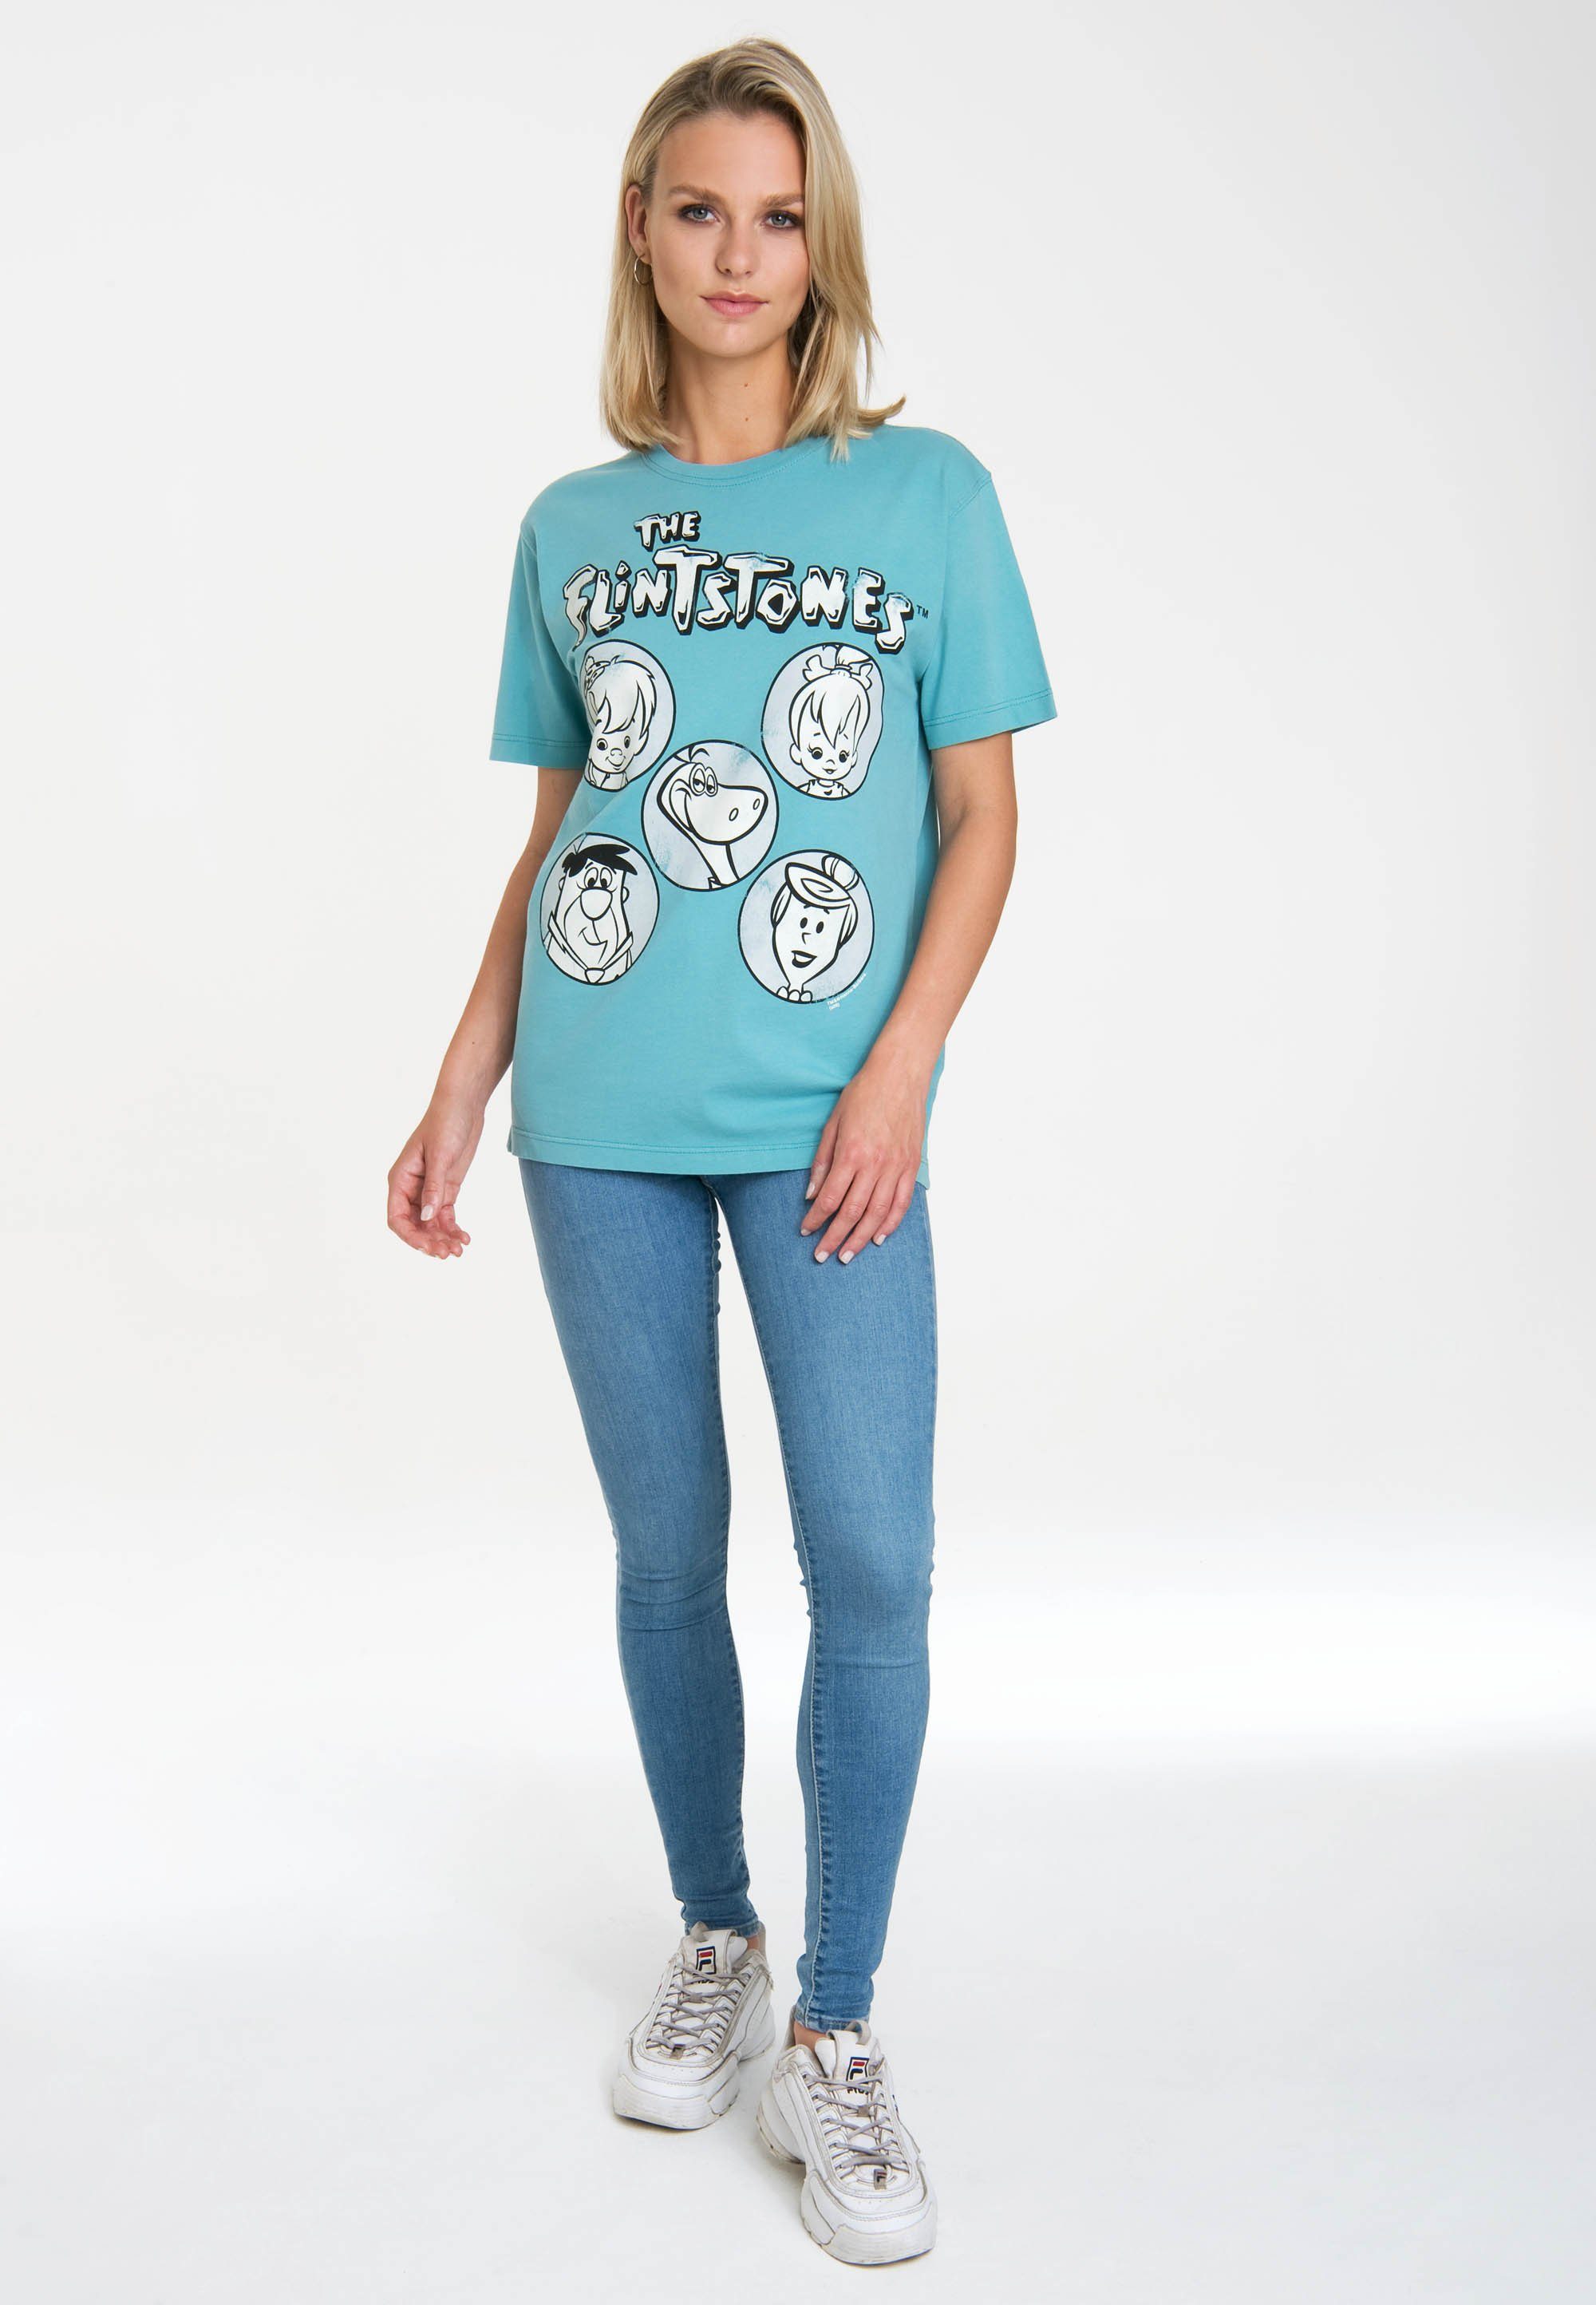 lizenziertem T-Shirt The mit Originaldesign Flintstones LOGOSHIRT